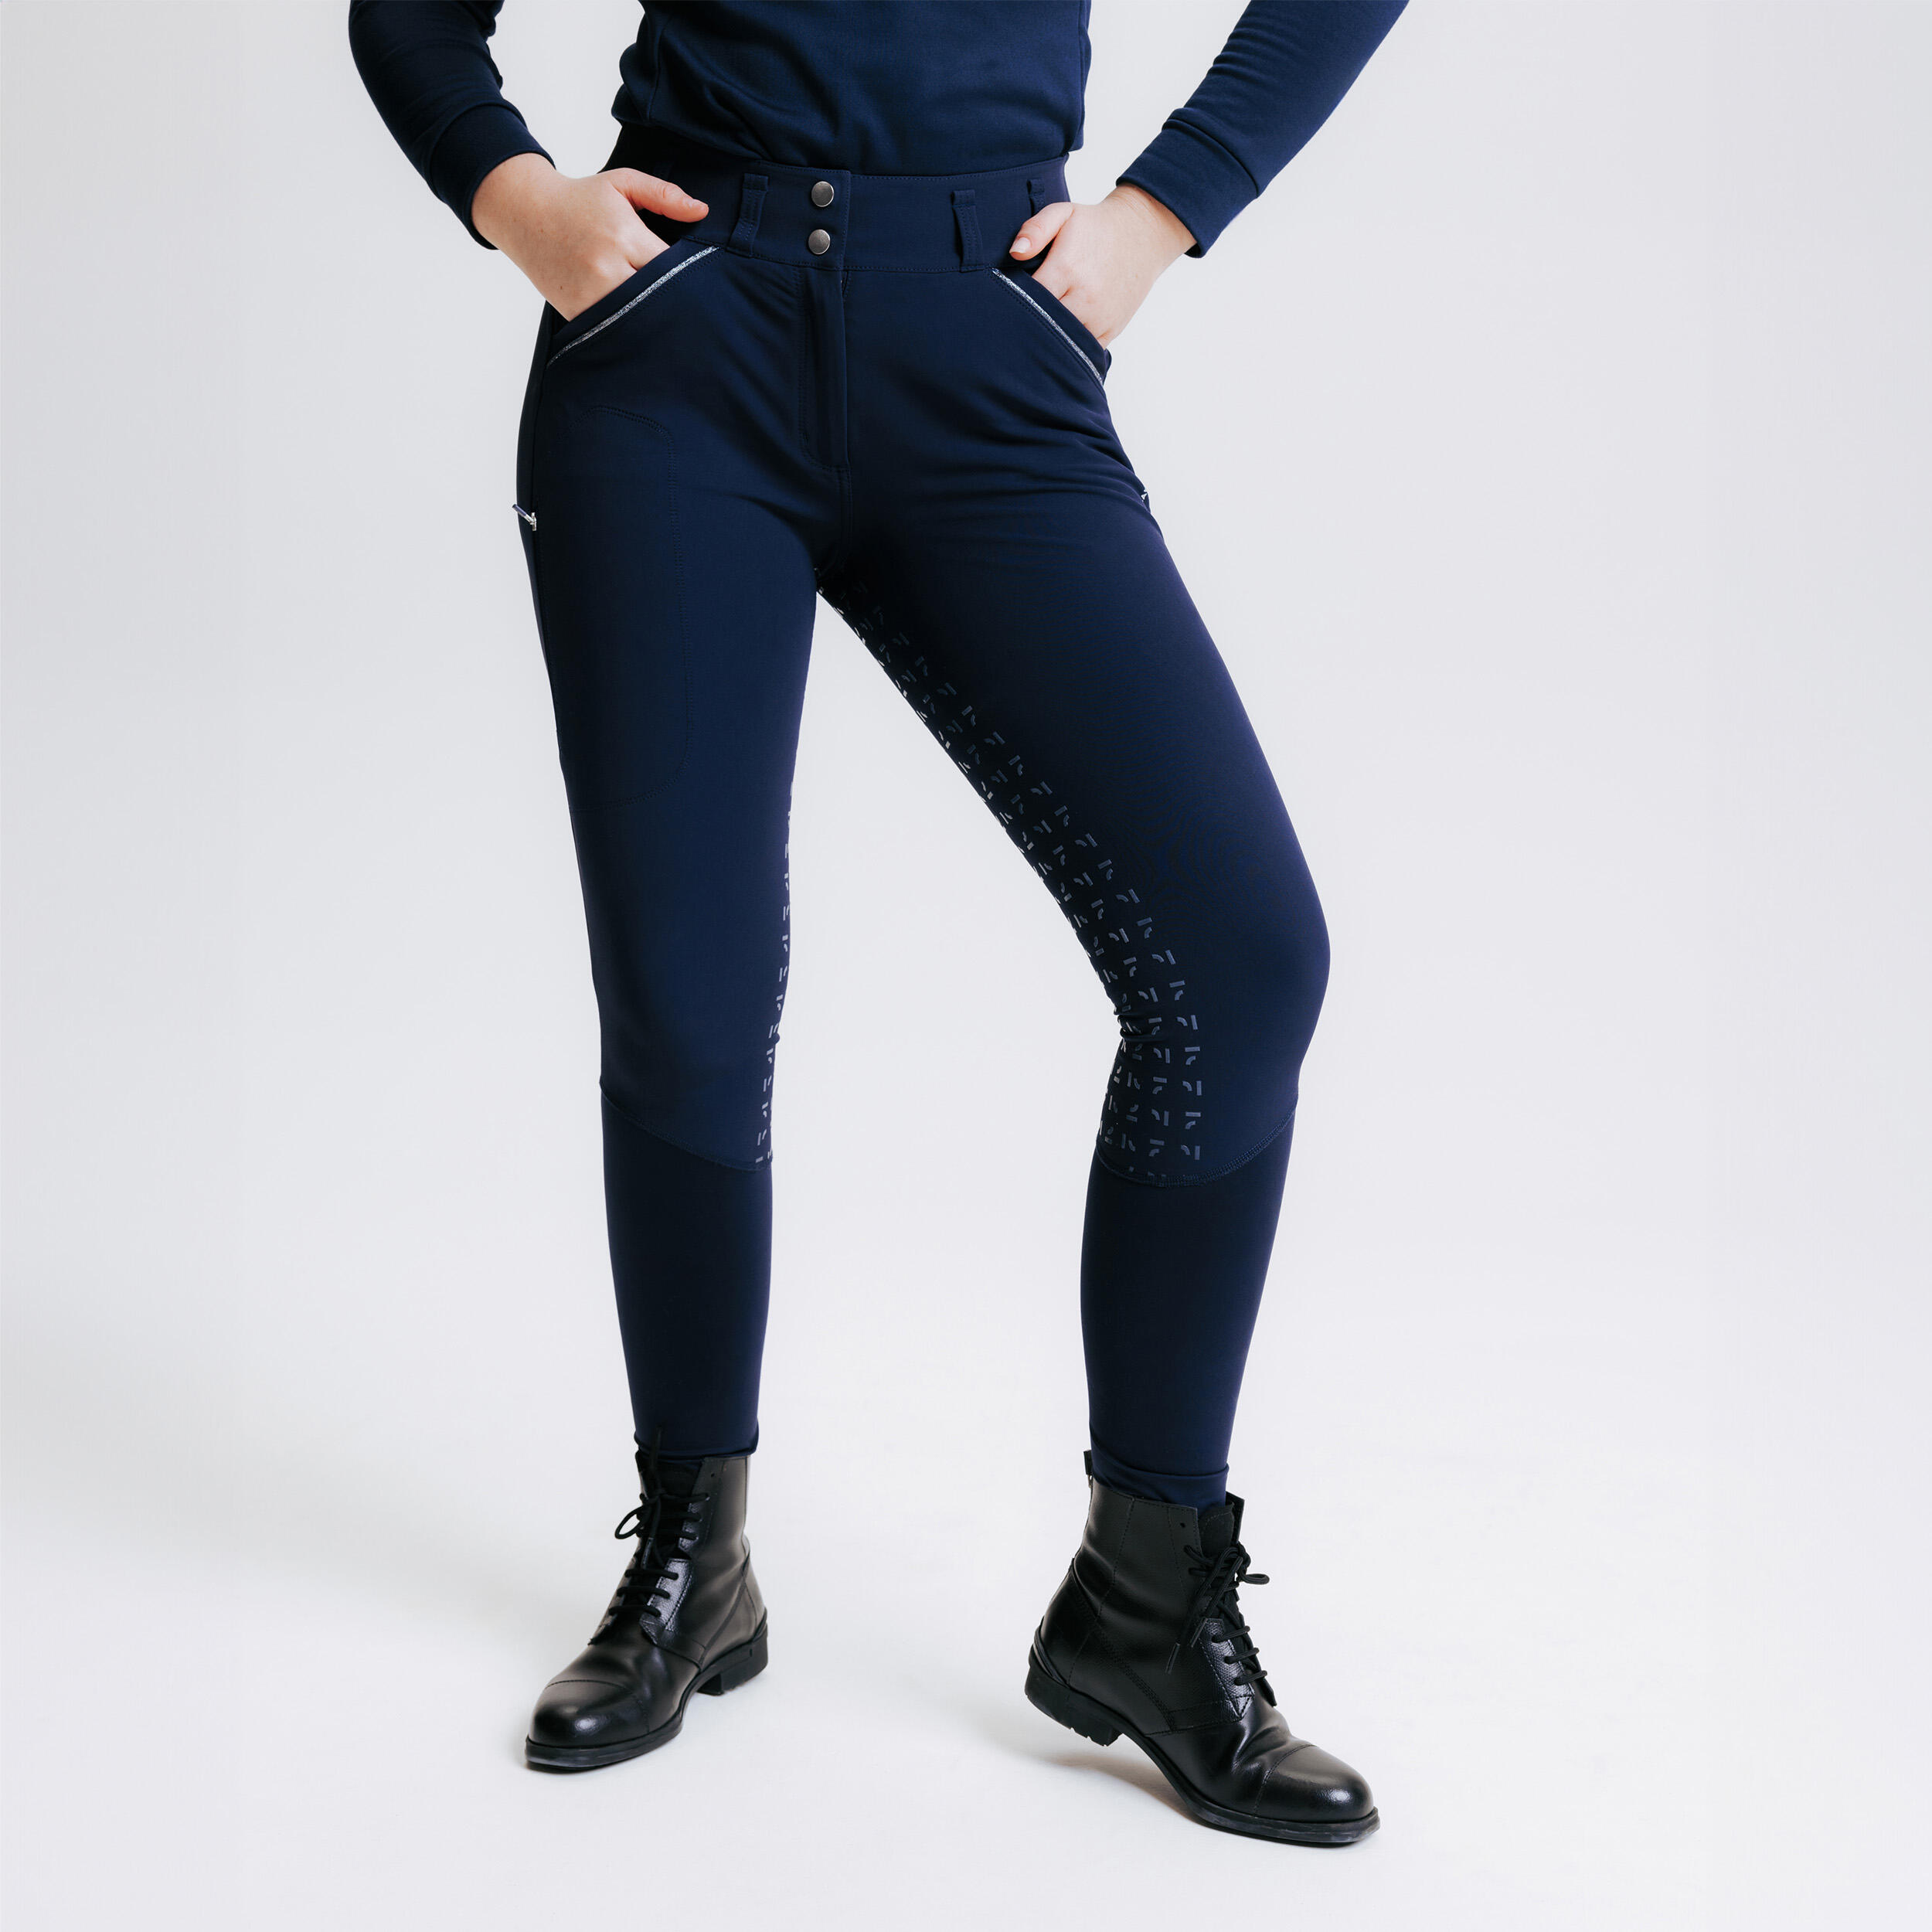 Decathlon | Pantaloni equitazione donna 900 FULL GRIP blu |  Fouganza